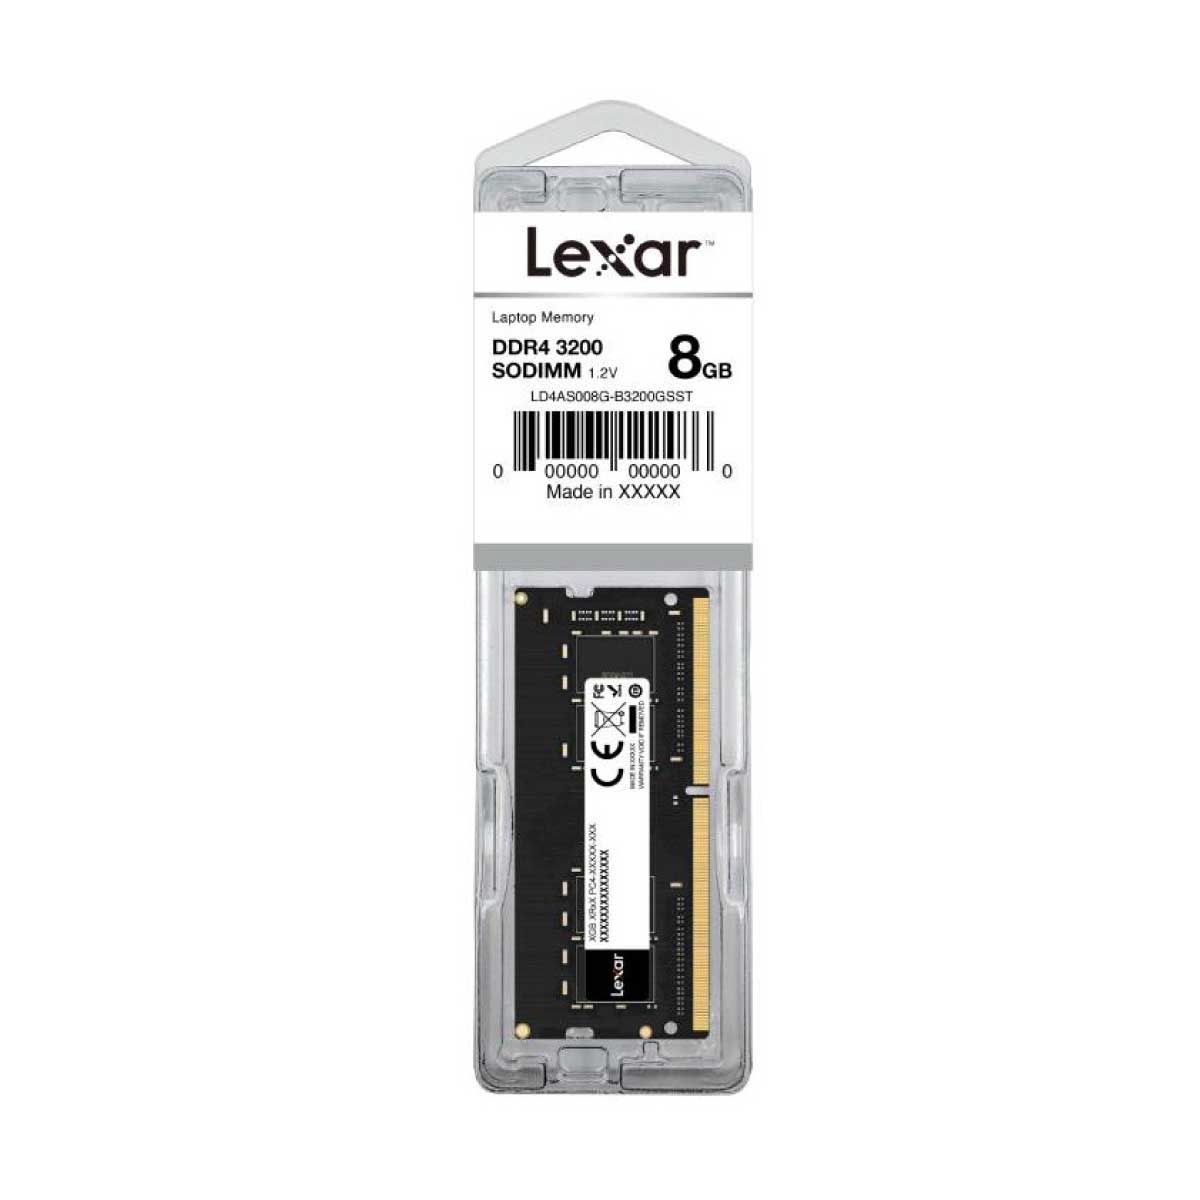 LEXAR DDR4-3200/2666 SODIMM LAPTOP MEMORY 8GB